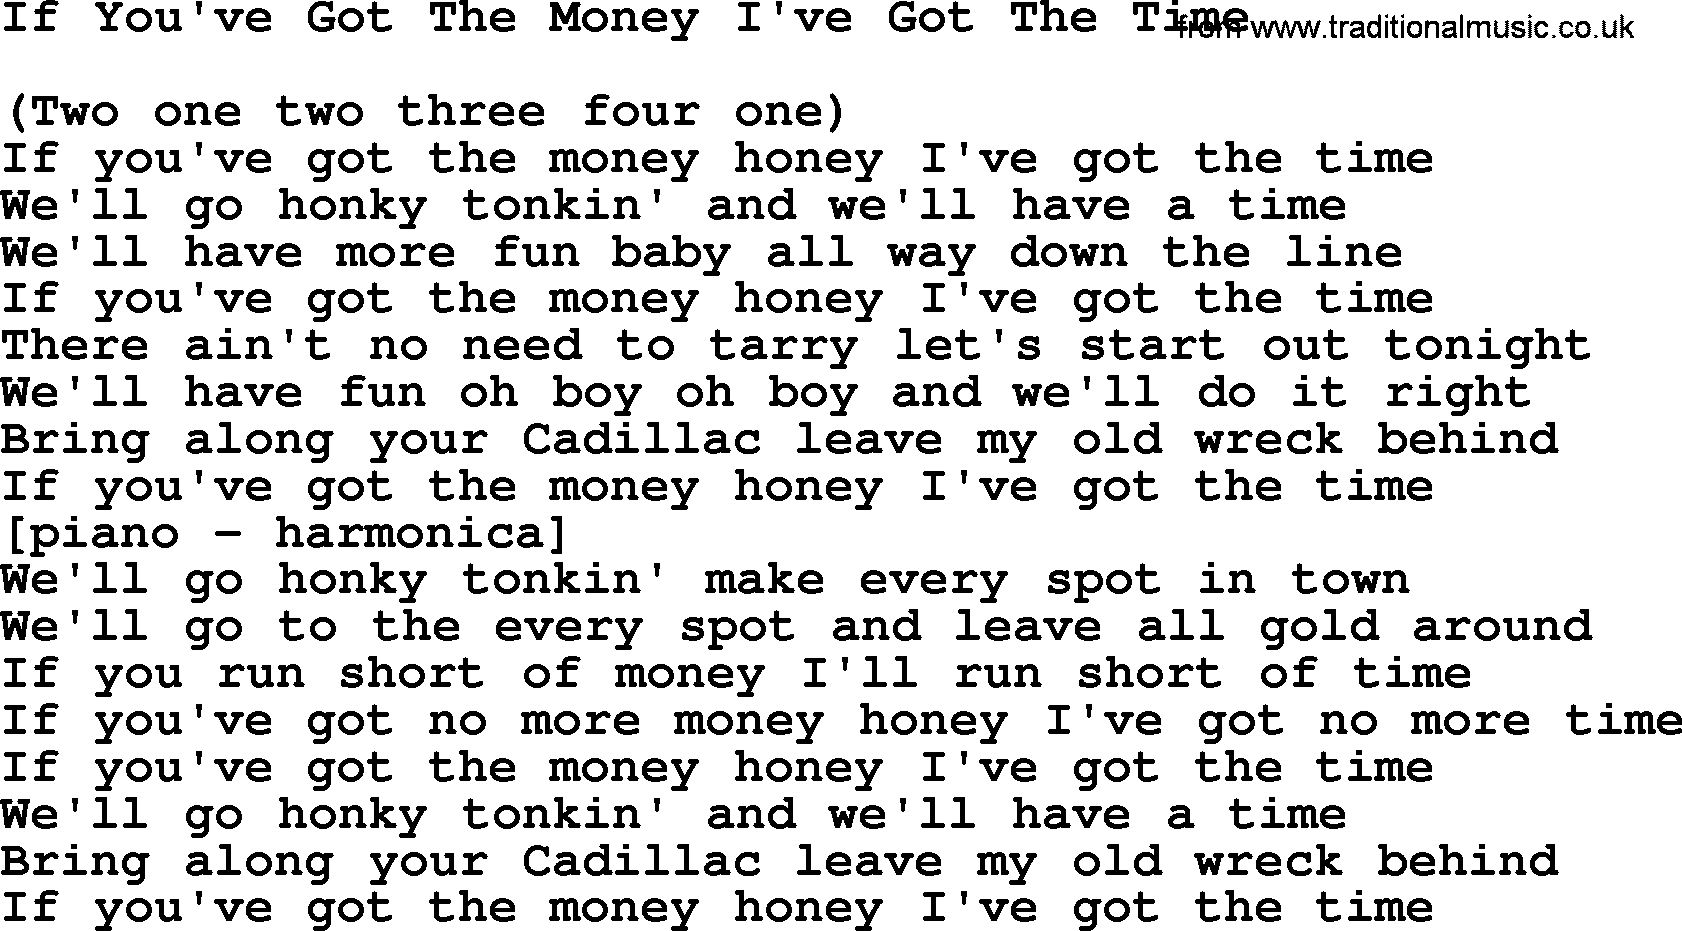 Willie Nelson song: If You've Got The Money I've Got The Time lyrics